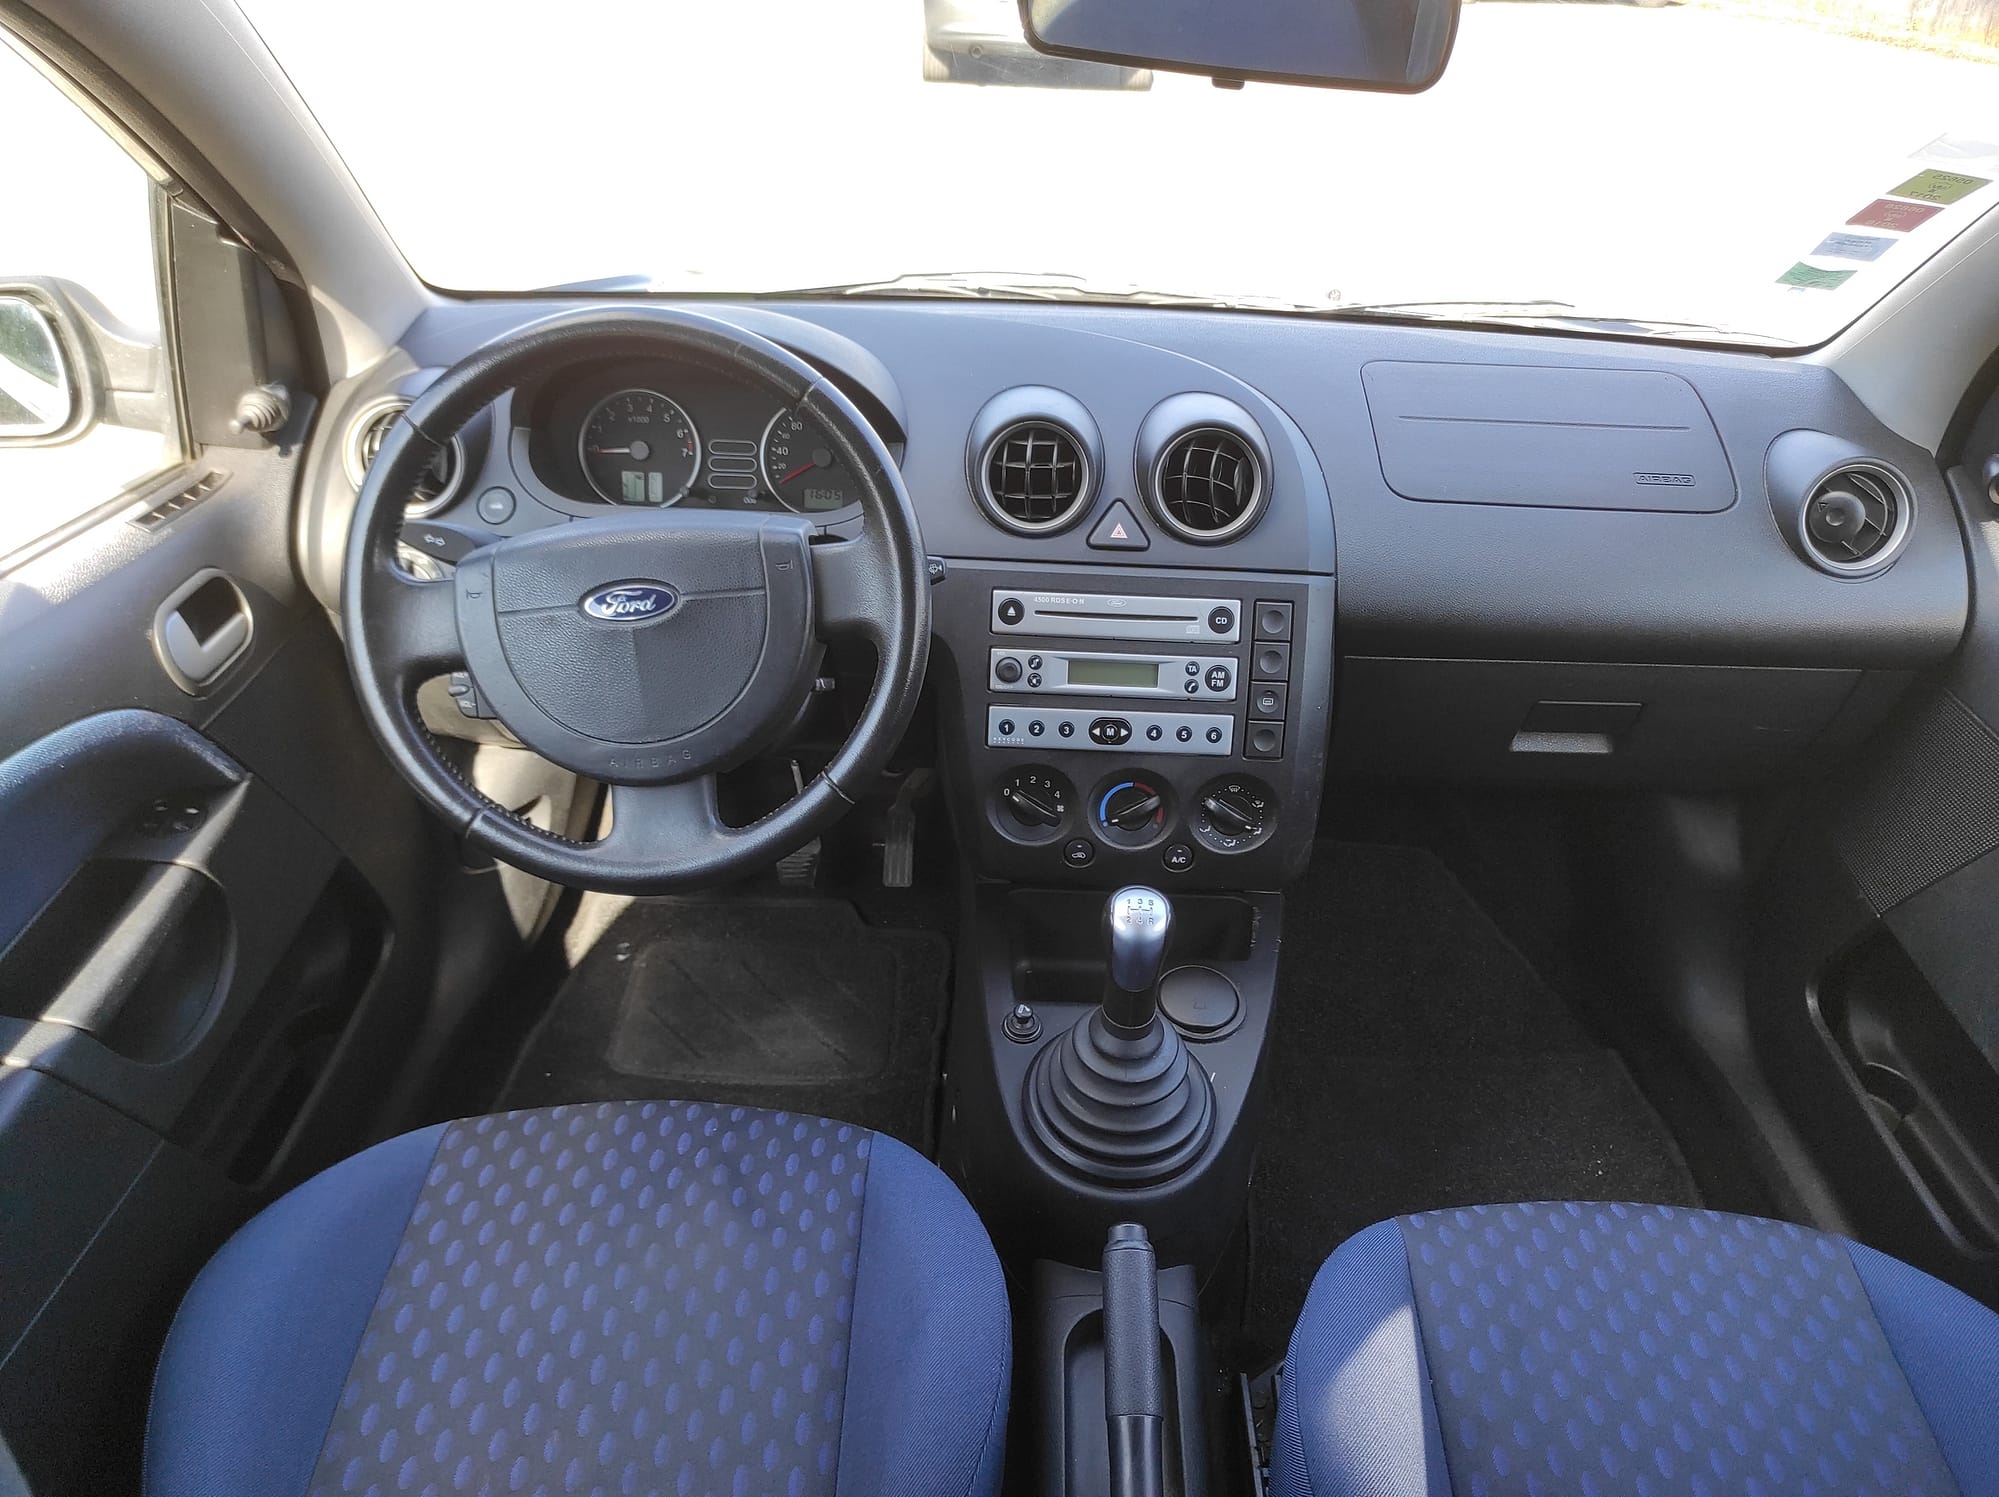 Ford Fiesta 2004 1.3 Ambiente - Automatix Motors - Voiture Occasion - Achat Voiture - Vente Voiture - Reprise Voiture